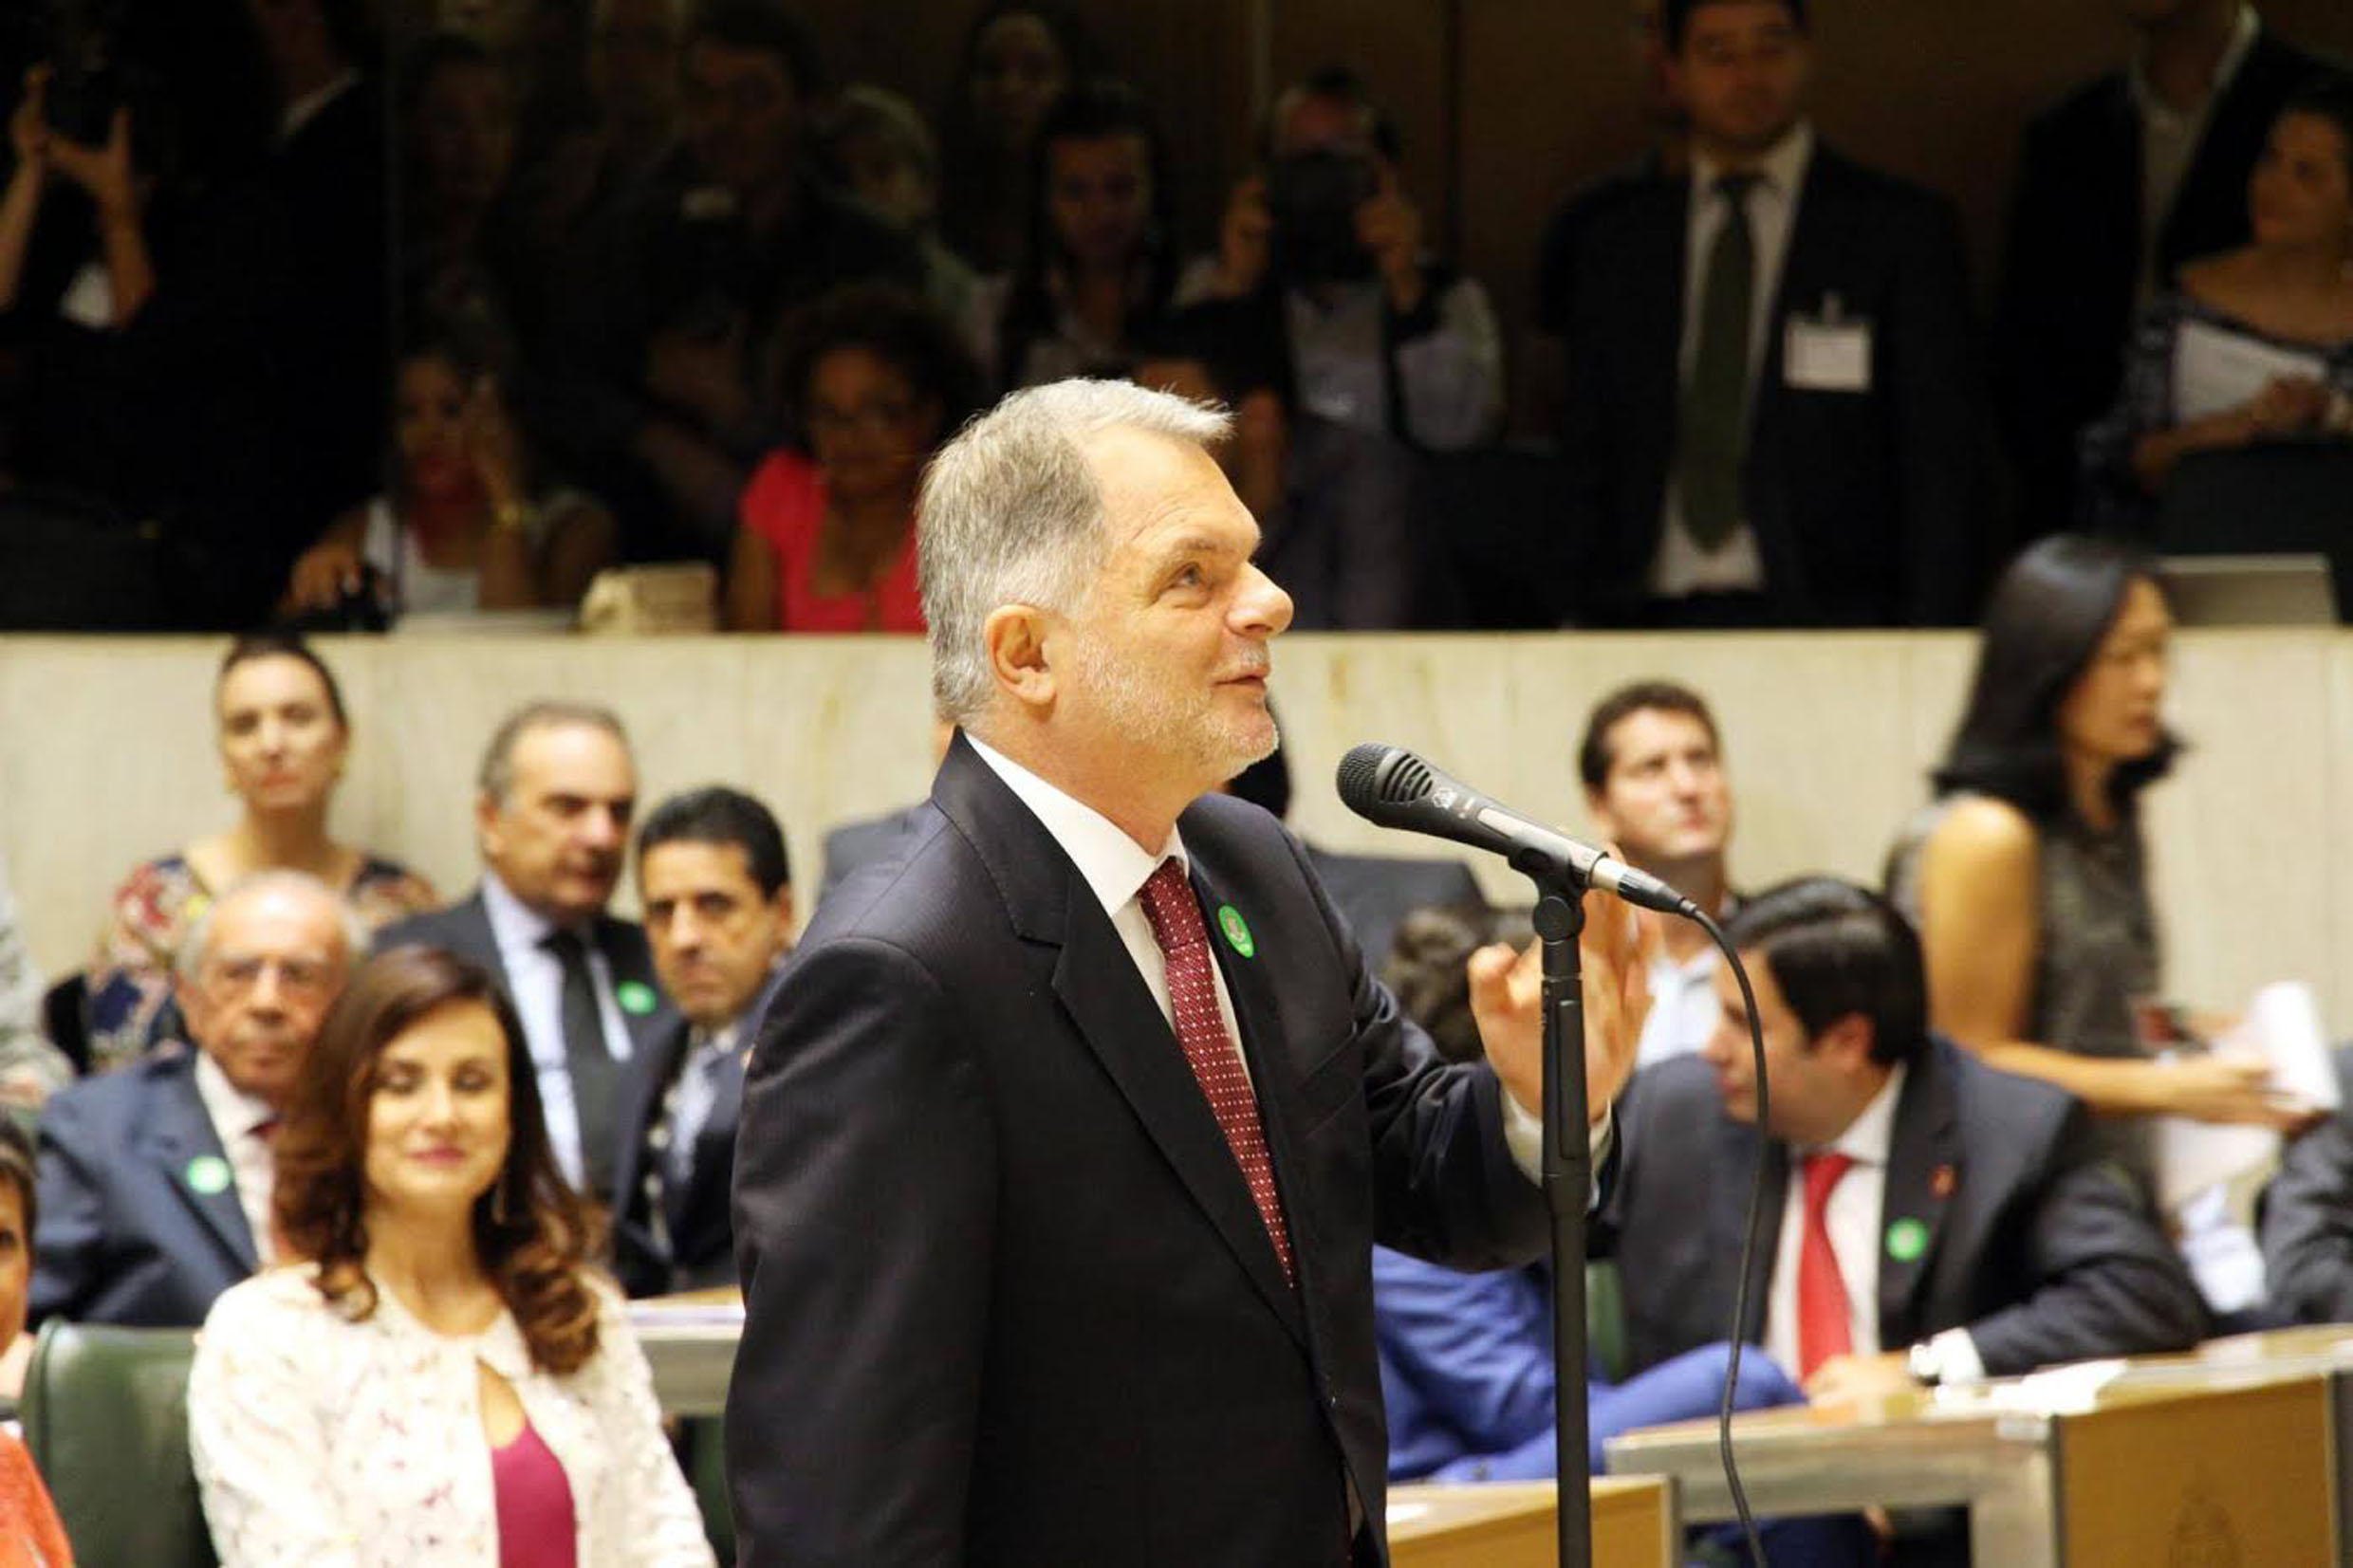 Bragato assumiu o nono mandato na Assembleia Legislativa<a style='float:right;color:#ccc' href='https://www3.al.sp.gov.br/repositorio/noticia/N-03-2015/fg168513.jpg' target=_blank><i class='bi bi-zoom-in'></i> Clique para ver a imagem </a>